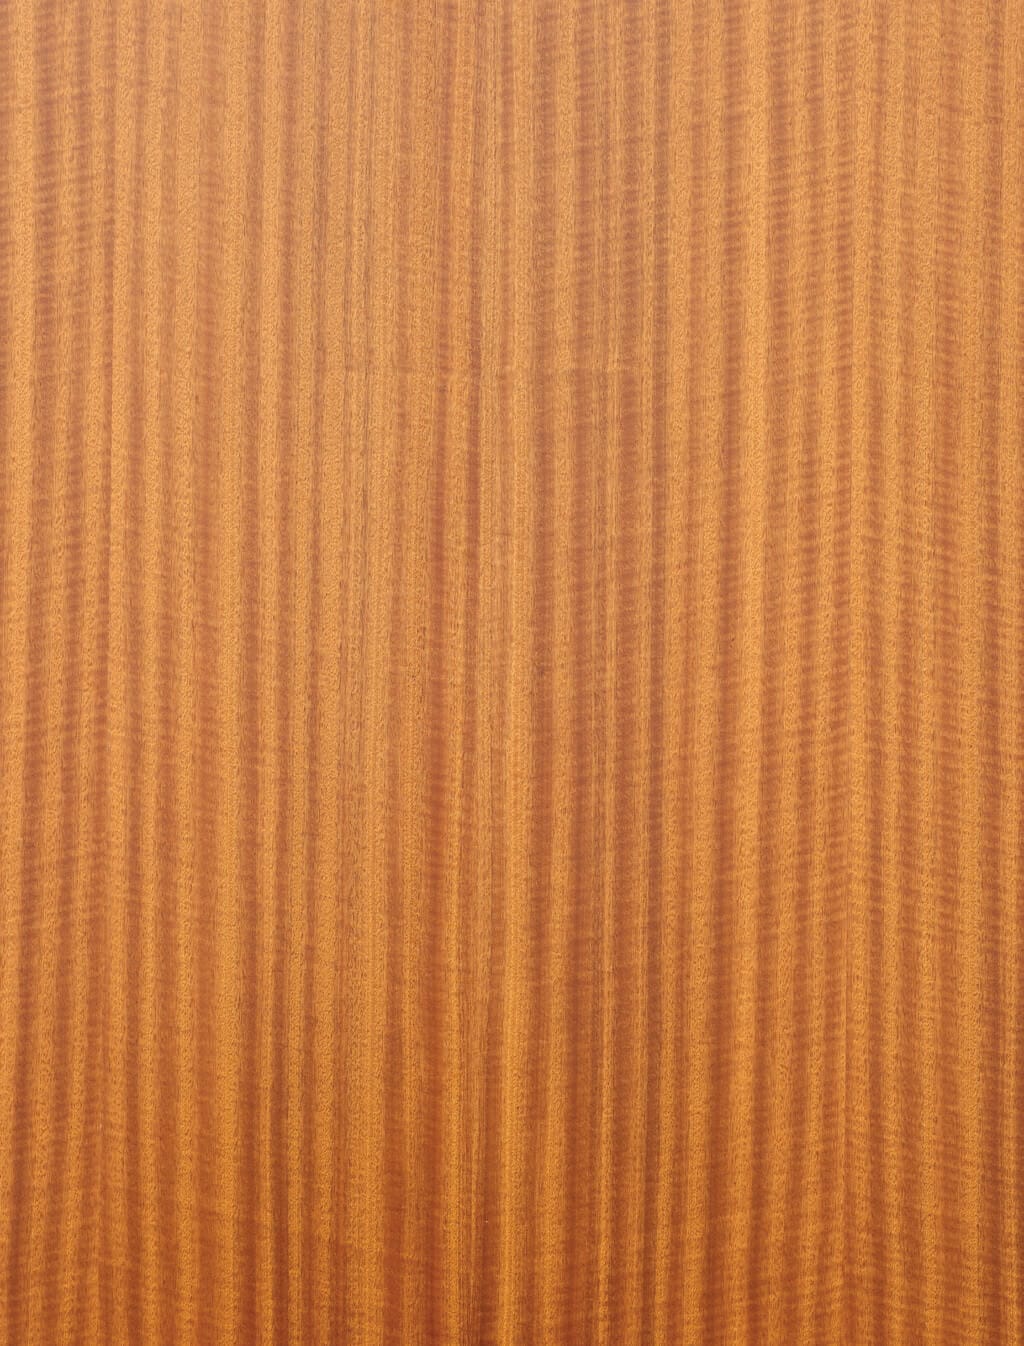 VT Industries Architectural Wood Doors